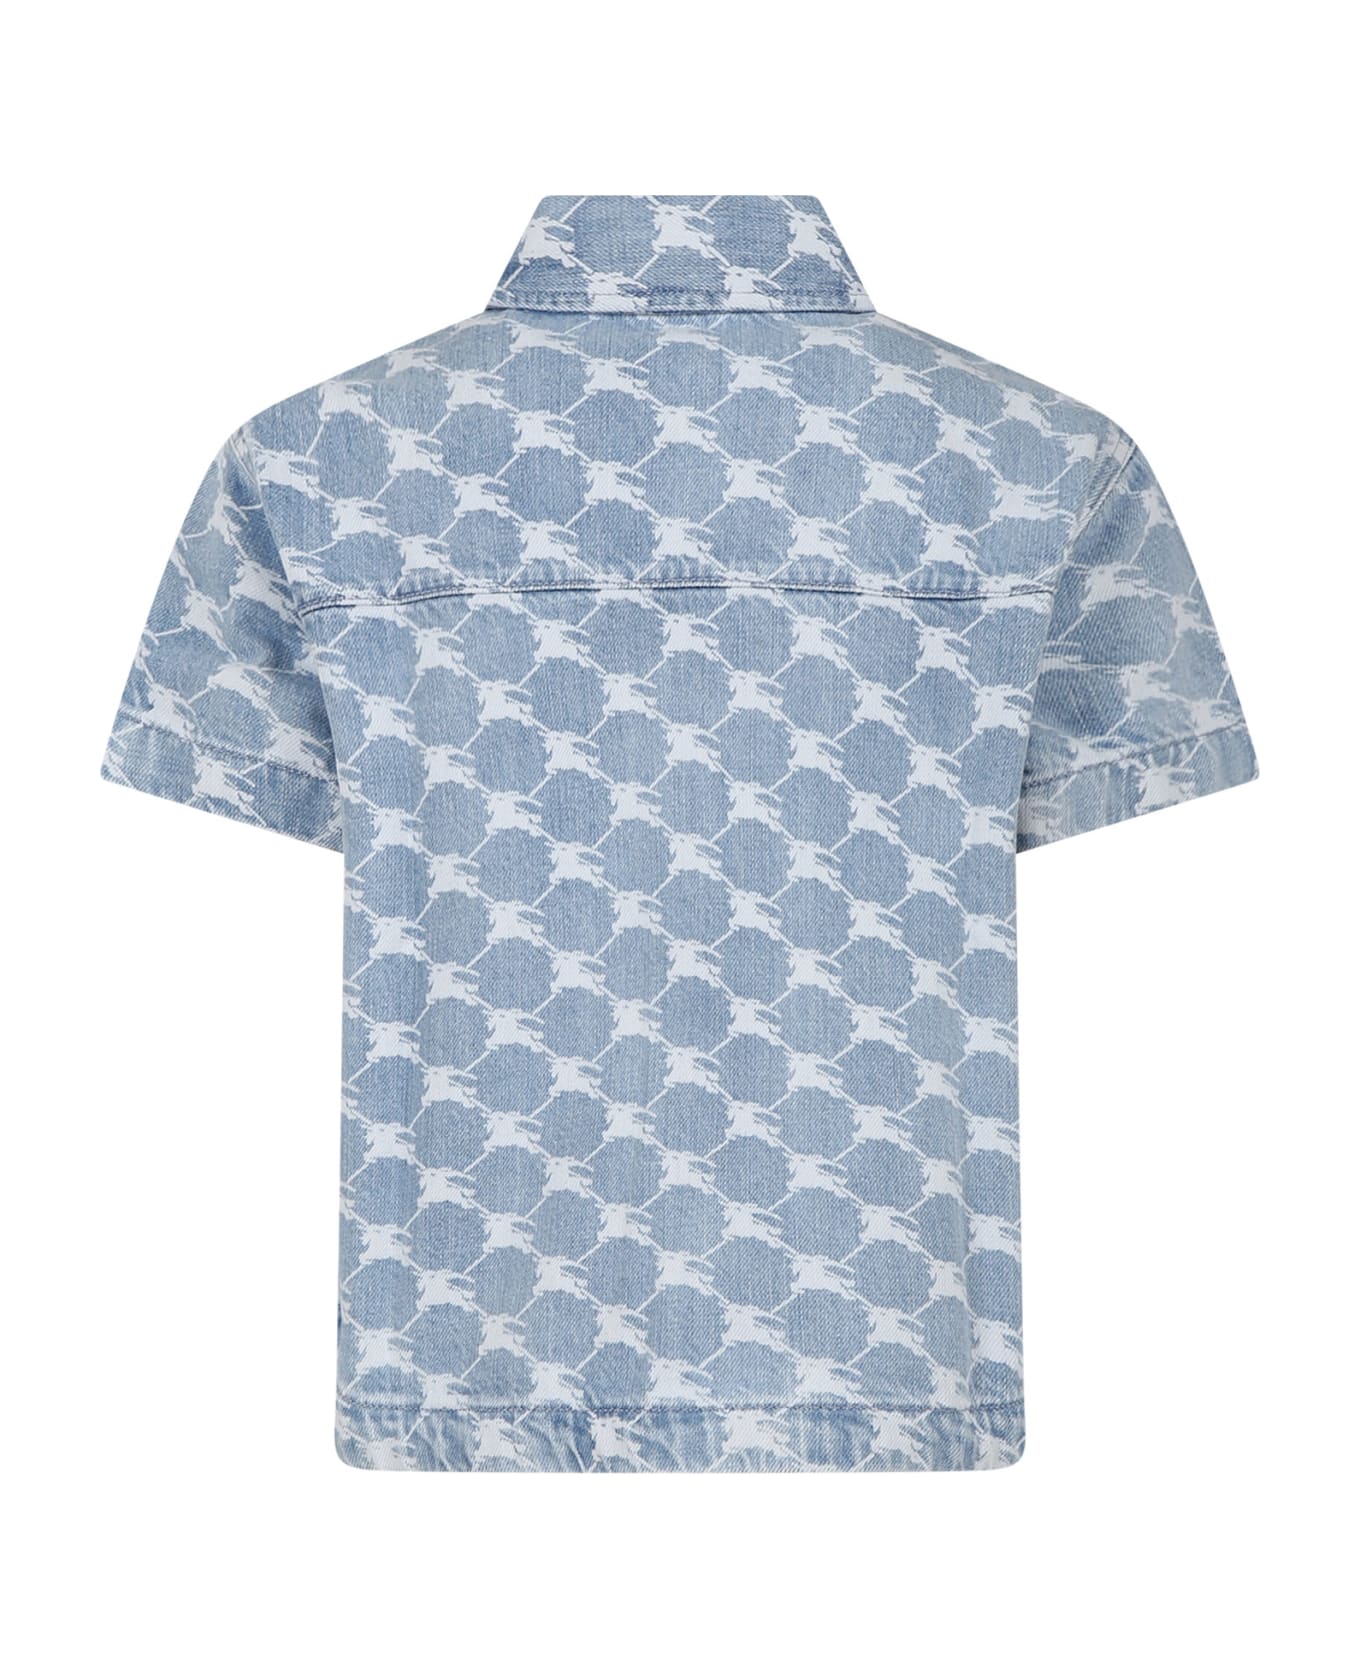 Burberry Denim Shirt For Boy With Iconic All-over Logo - Denim